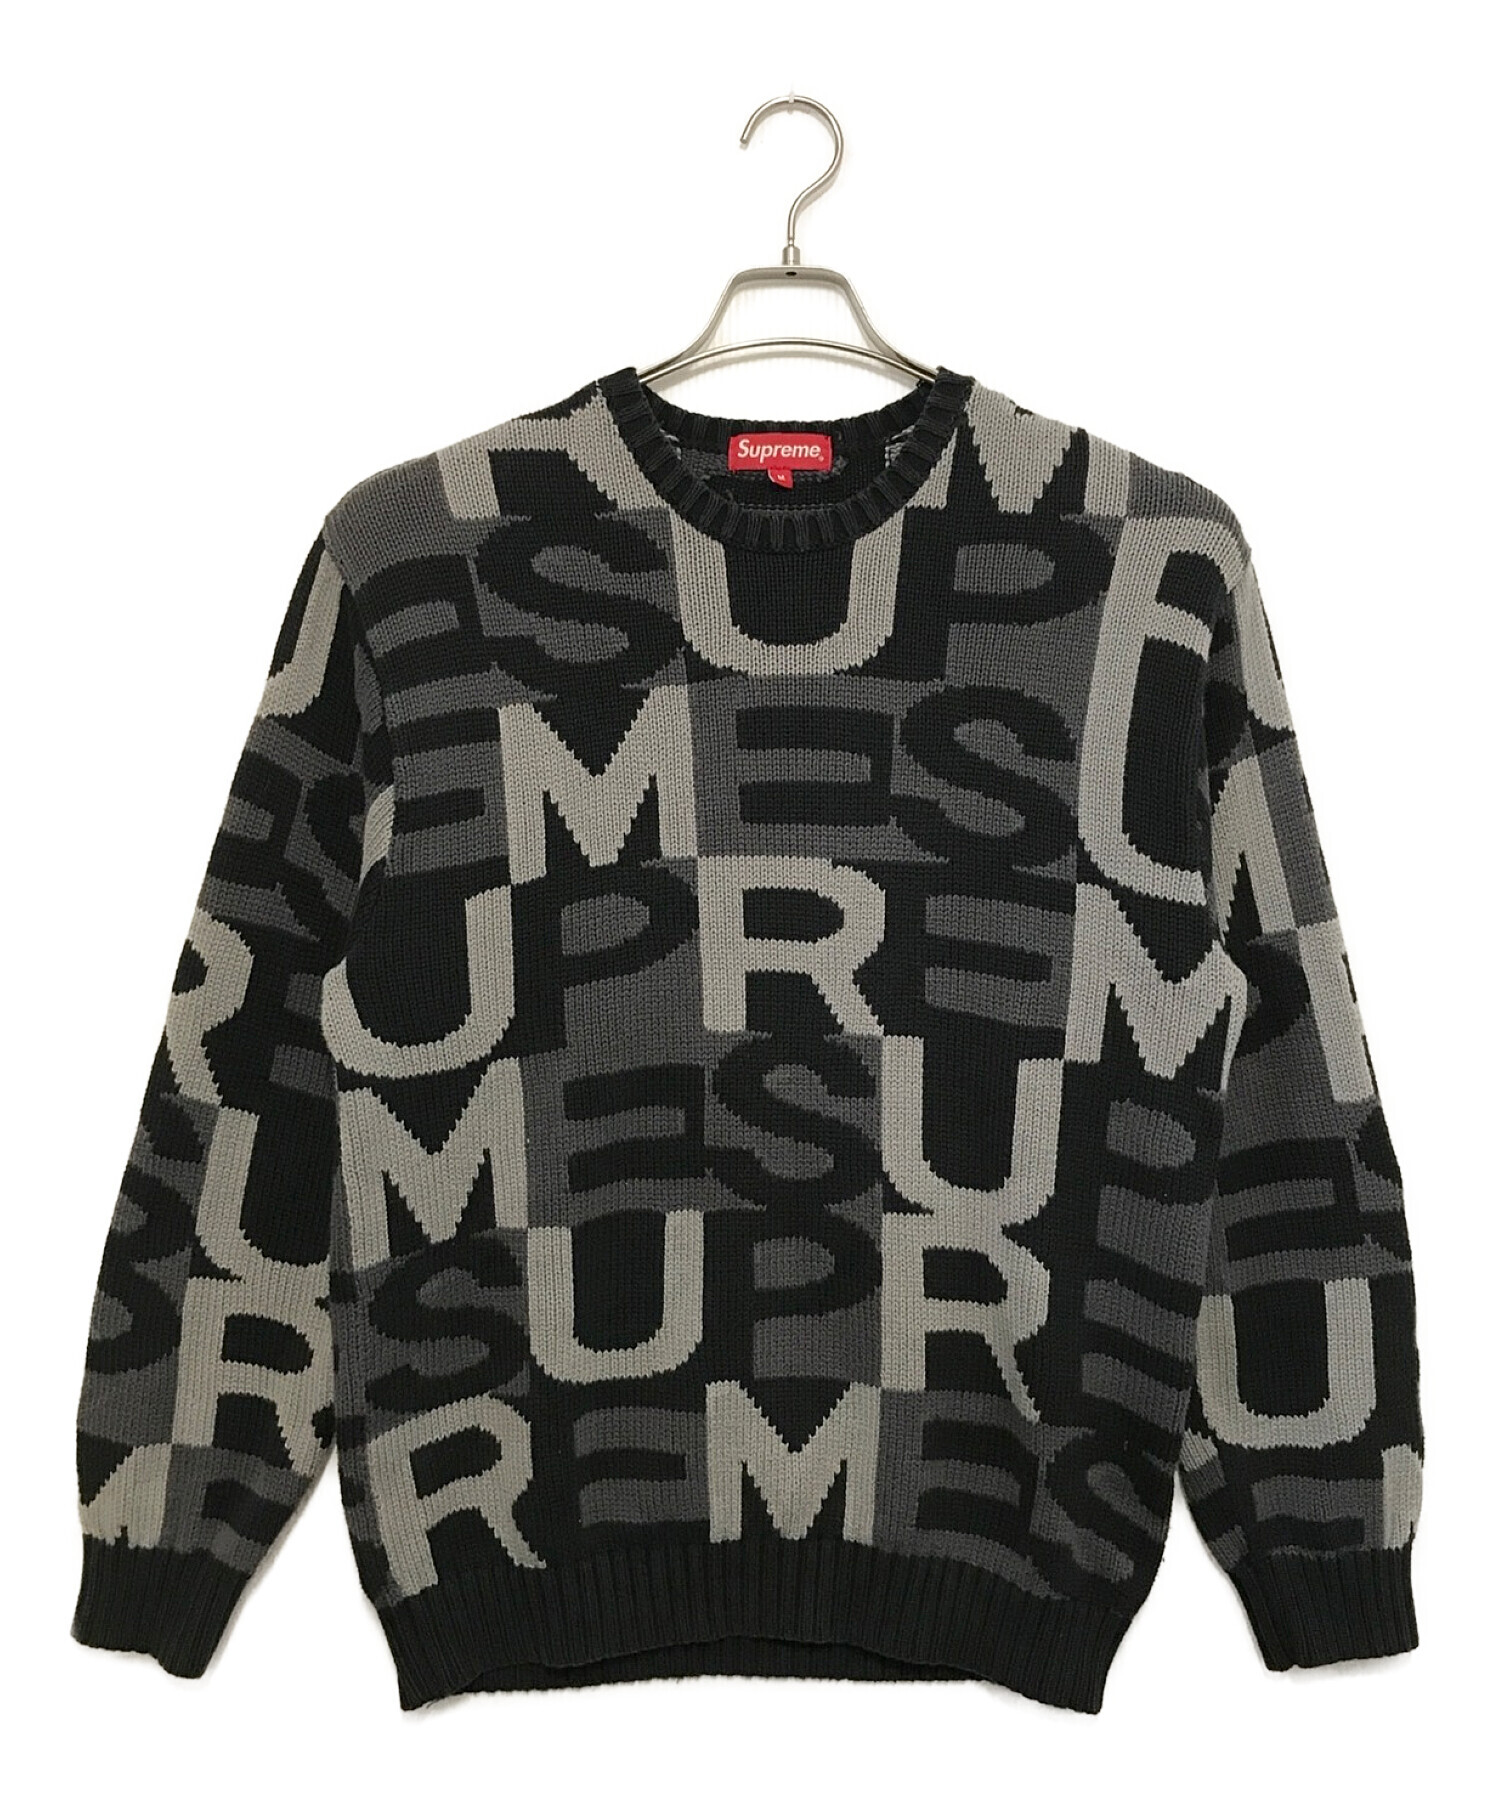 Supreme Big Letters Sweater M